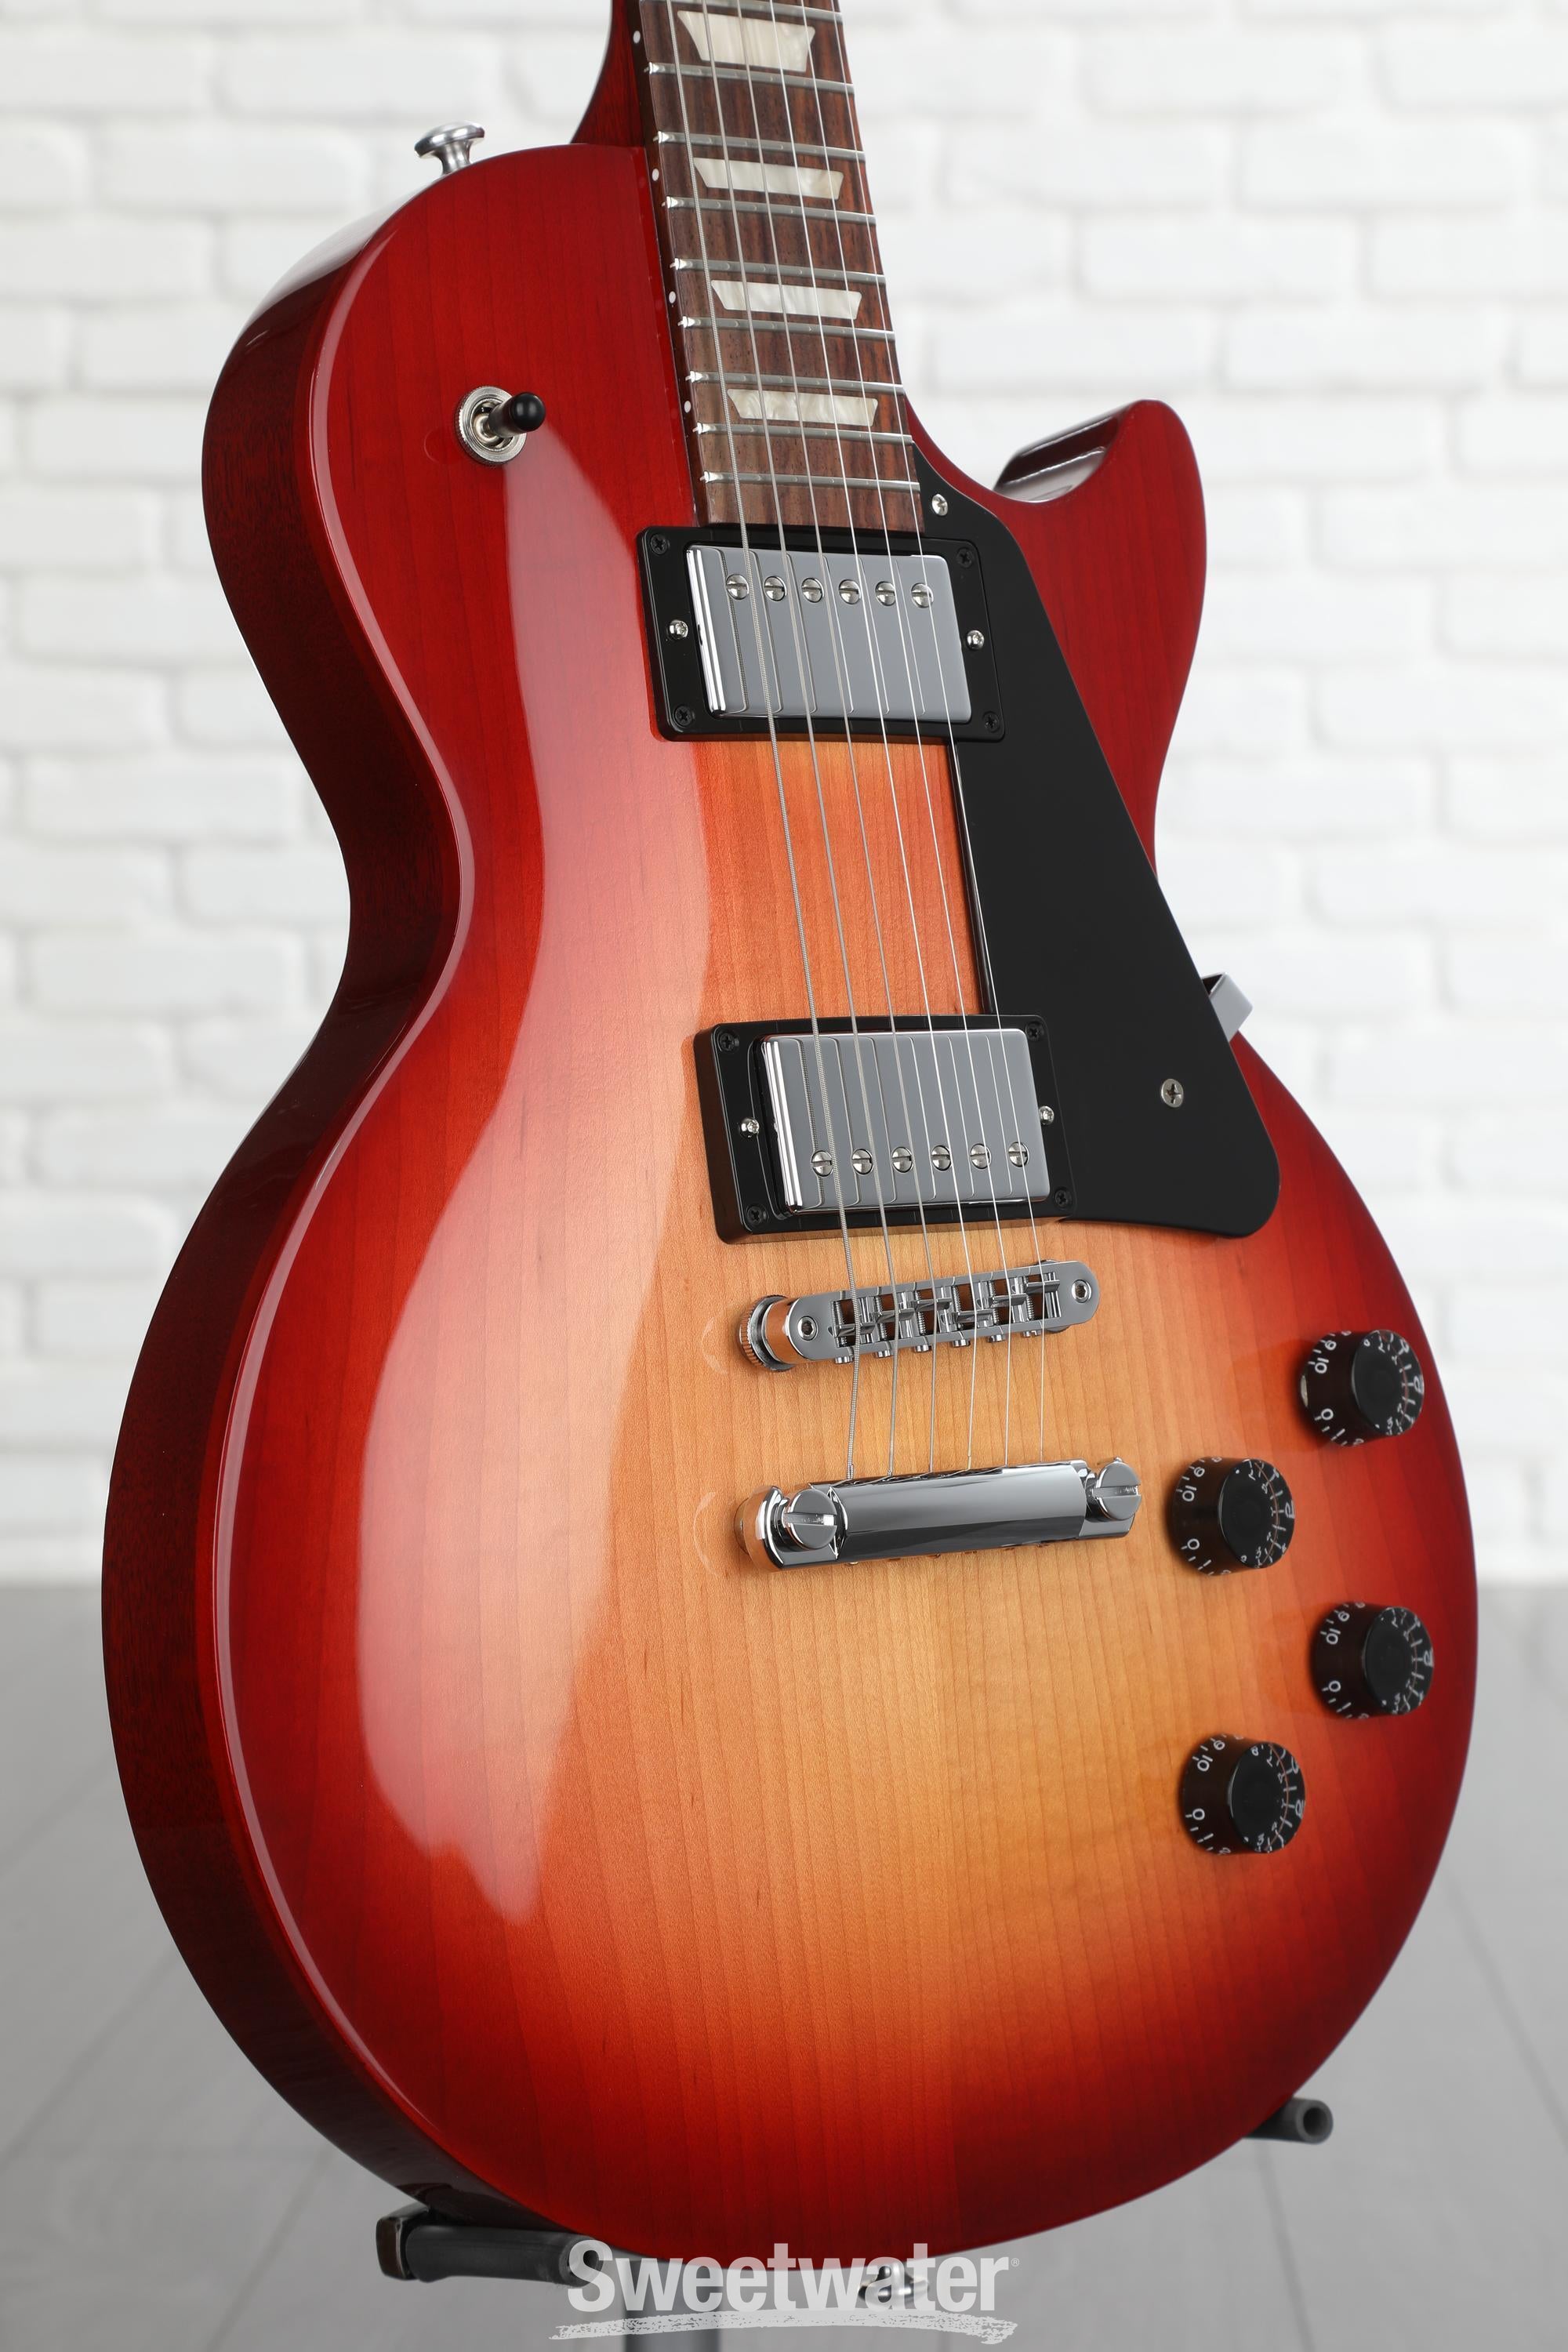 Gibson Les Paul Studio Plus Electric Guitar - Heritage Cherry Sunburst,  Sweetwater Exclusive